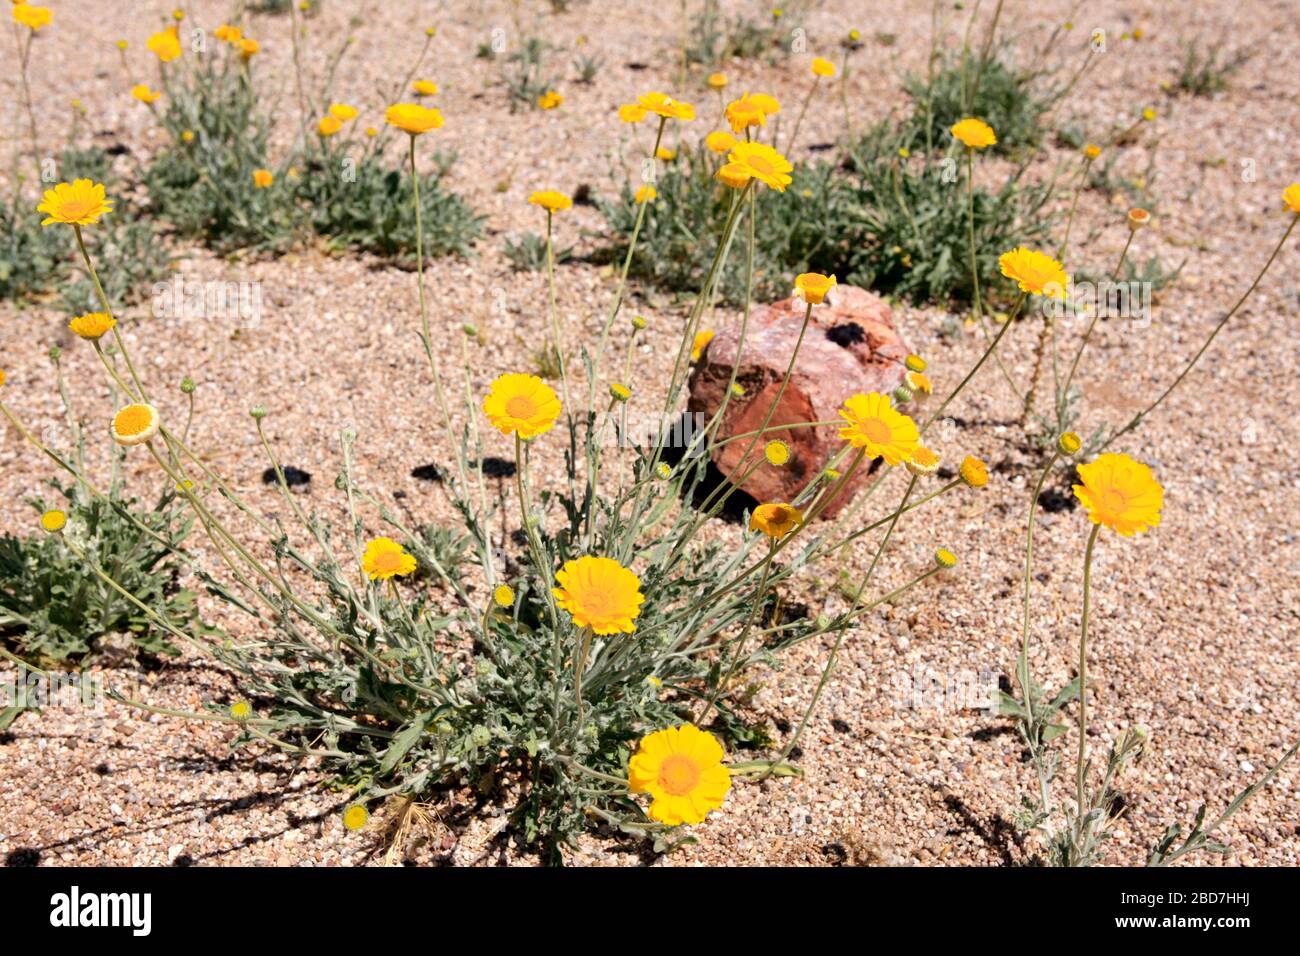 Desert Marigold - Baileya Muliradiata. A sun-loving native to the deserts of Northern Mexico and SW United States. Stock Photo